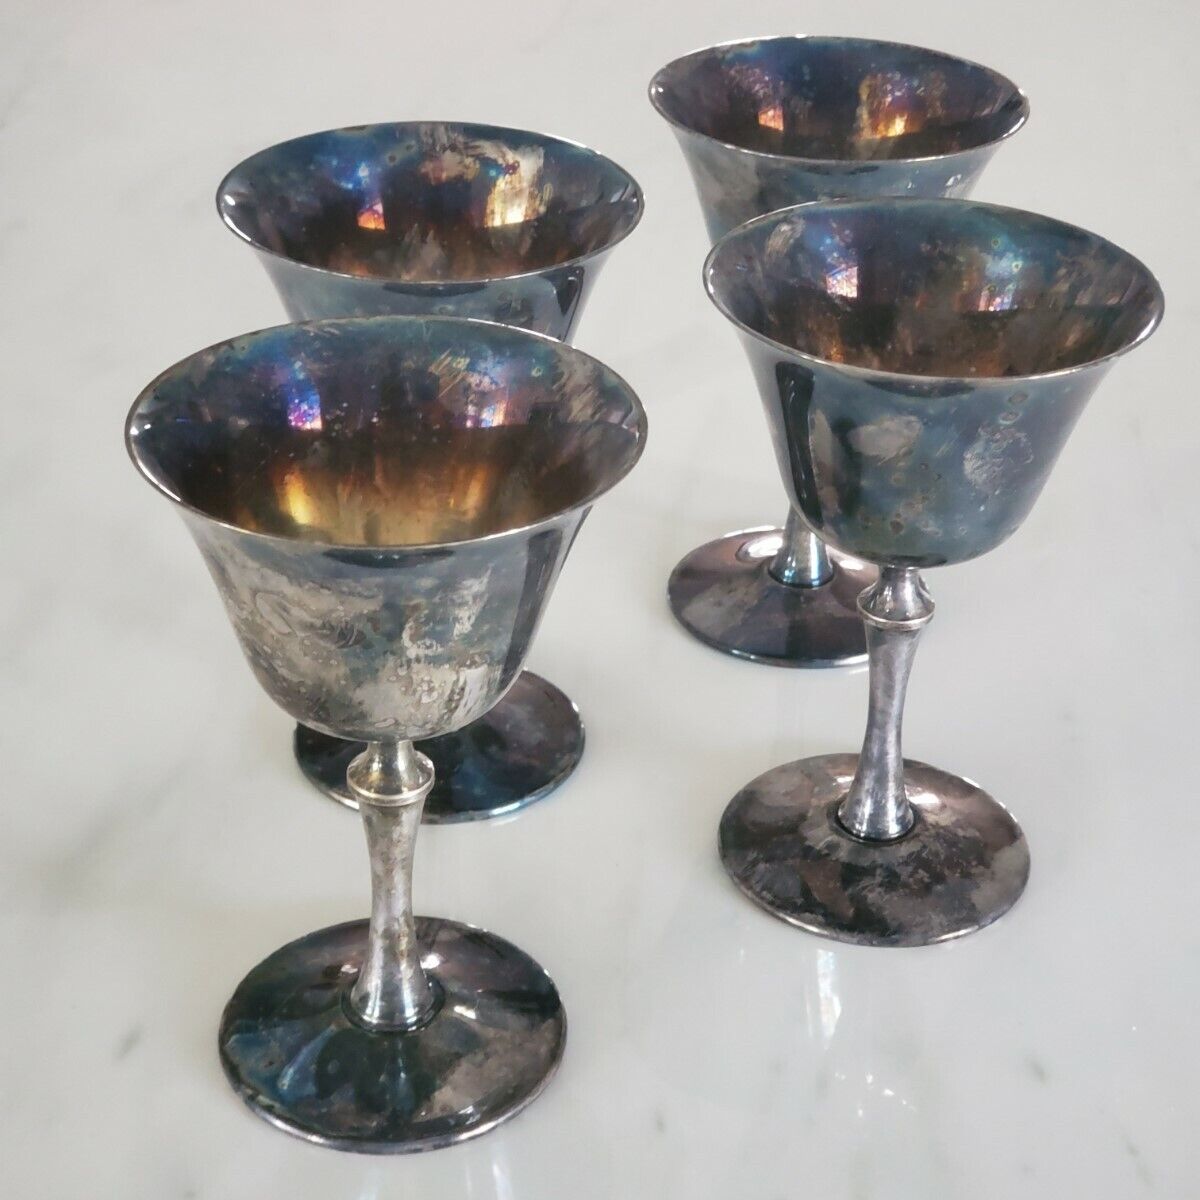 EL delberti Italy - Set of 4 Vintage Silverplated Fluted Goblets